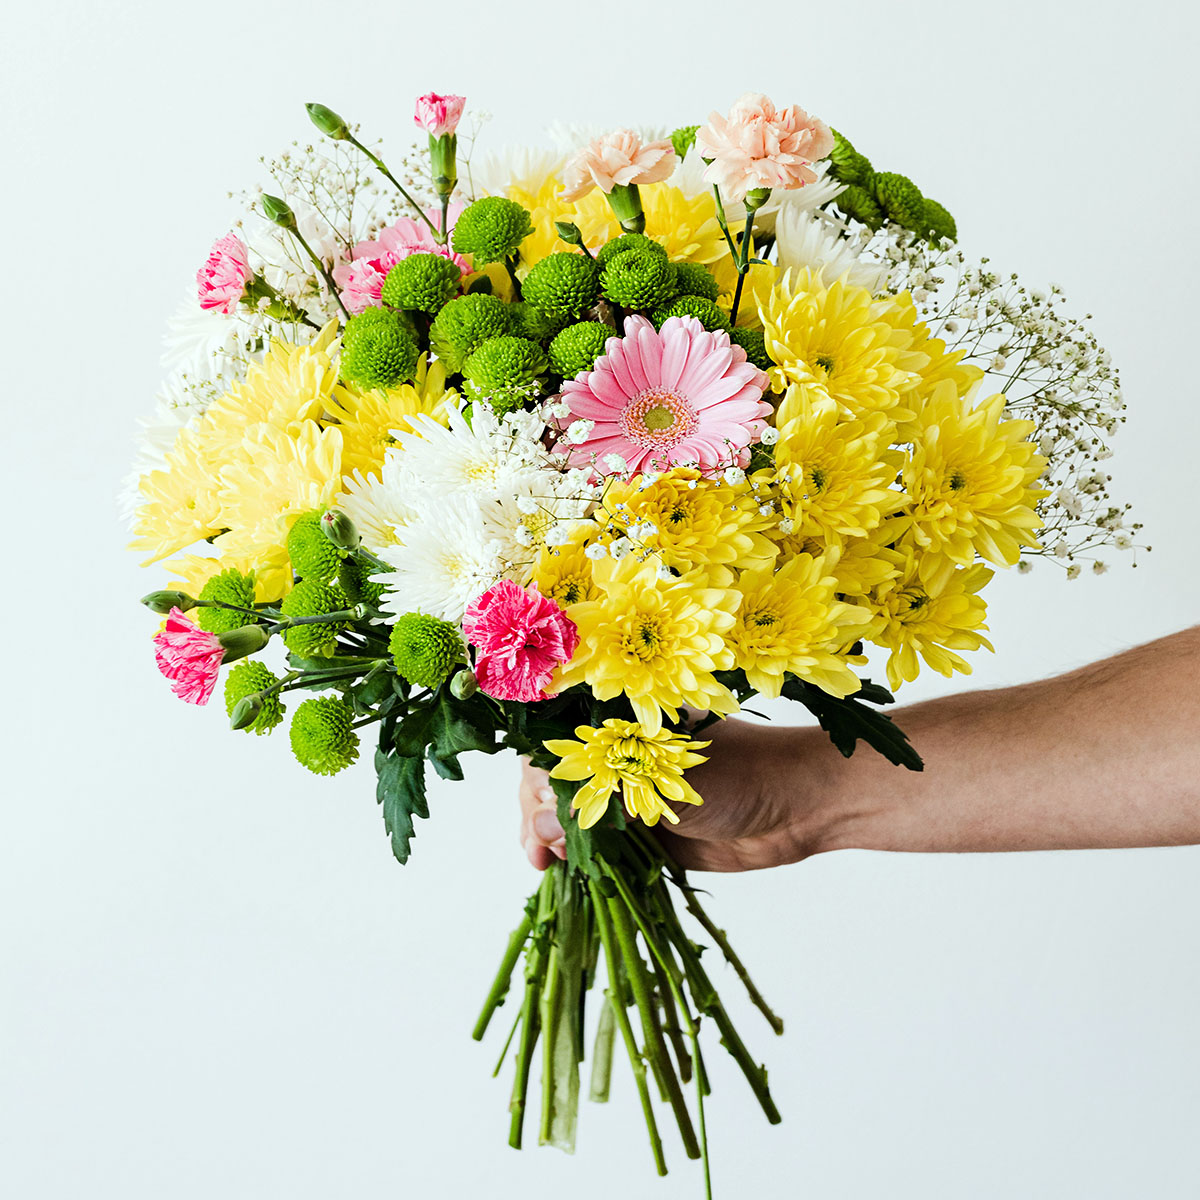 Chrysanthemum bouquet by Karolina Grabowska on Thursd